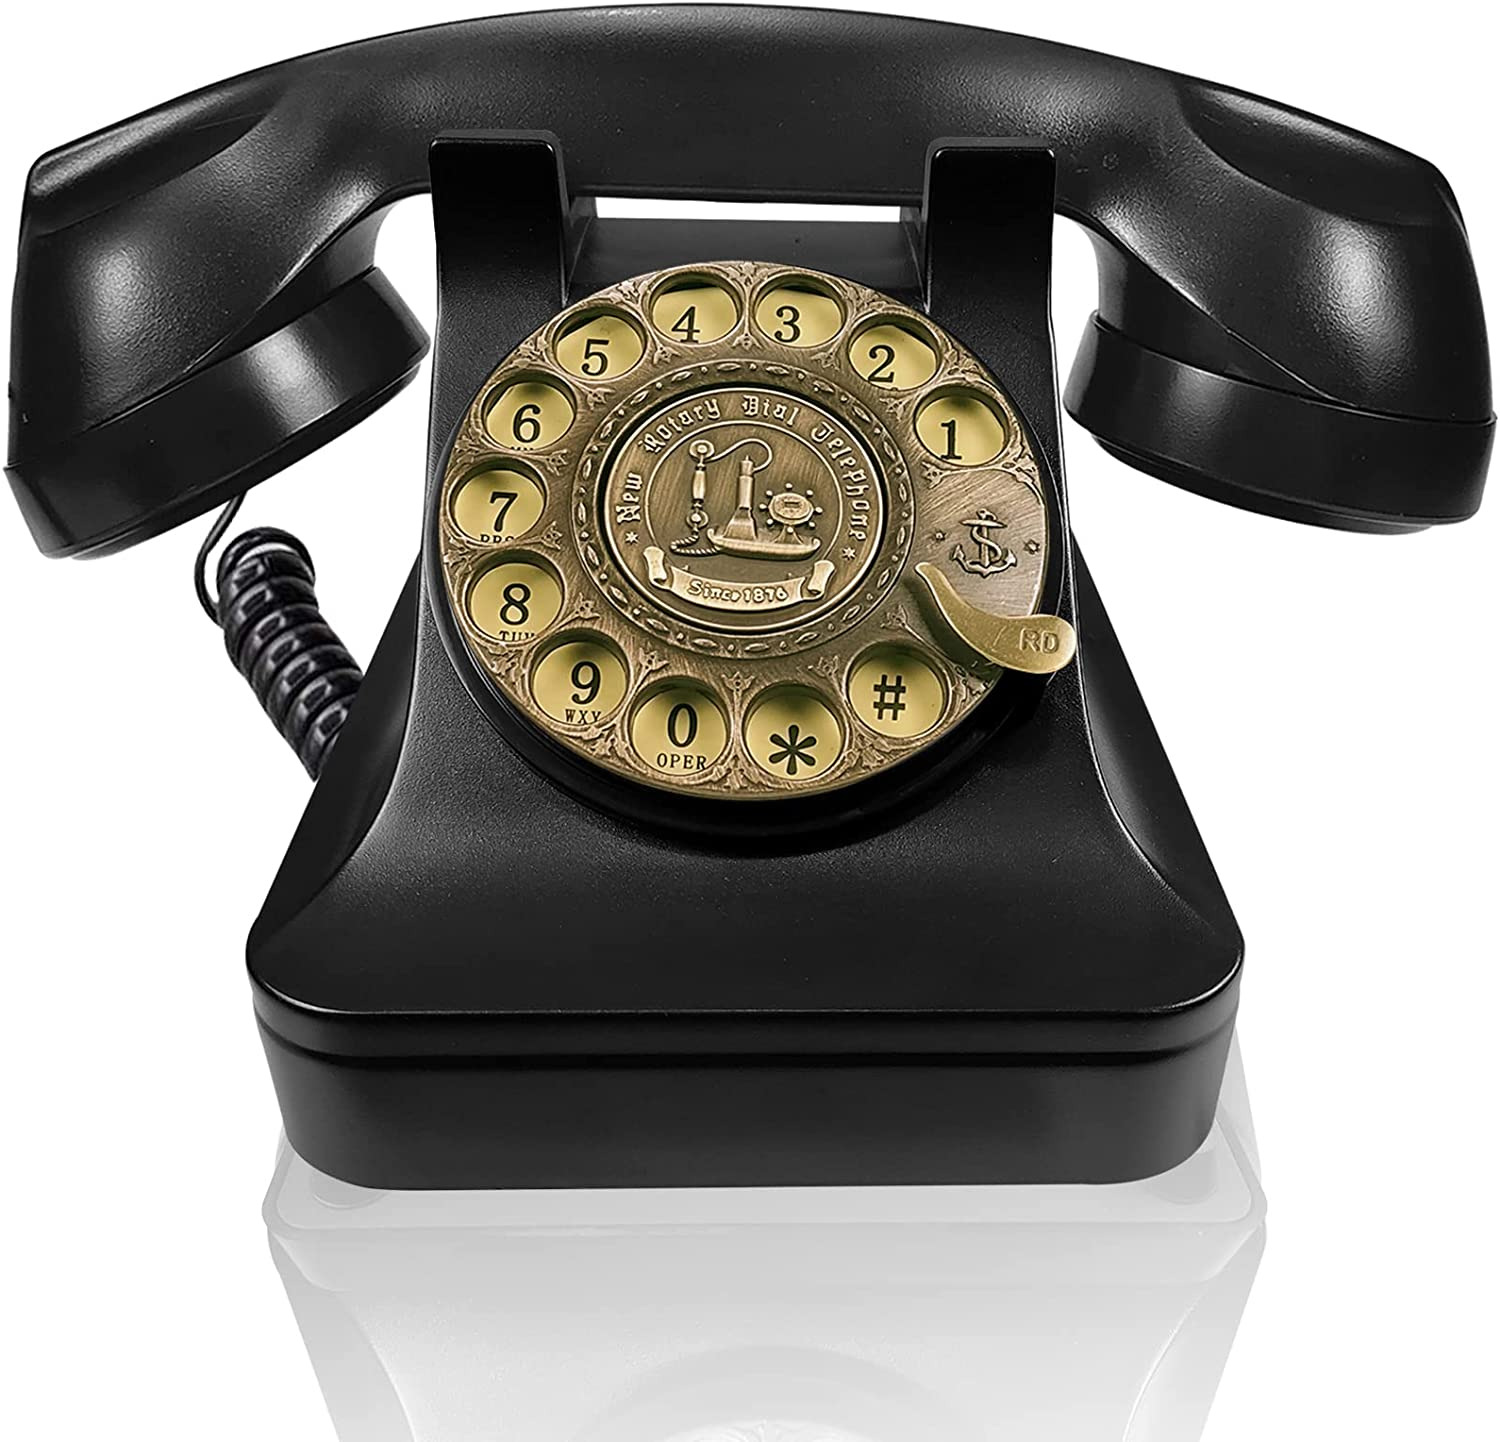 Retro Rotary Landline Phone for Home, Vintage Rotary Dial Phone Old Fashion Tele